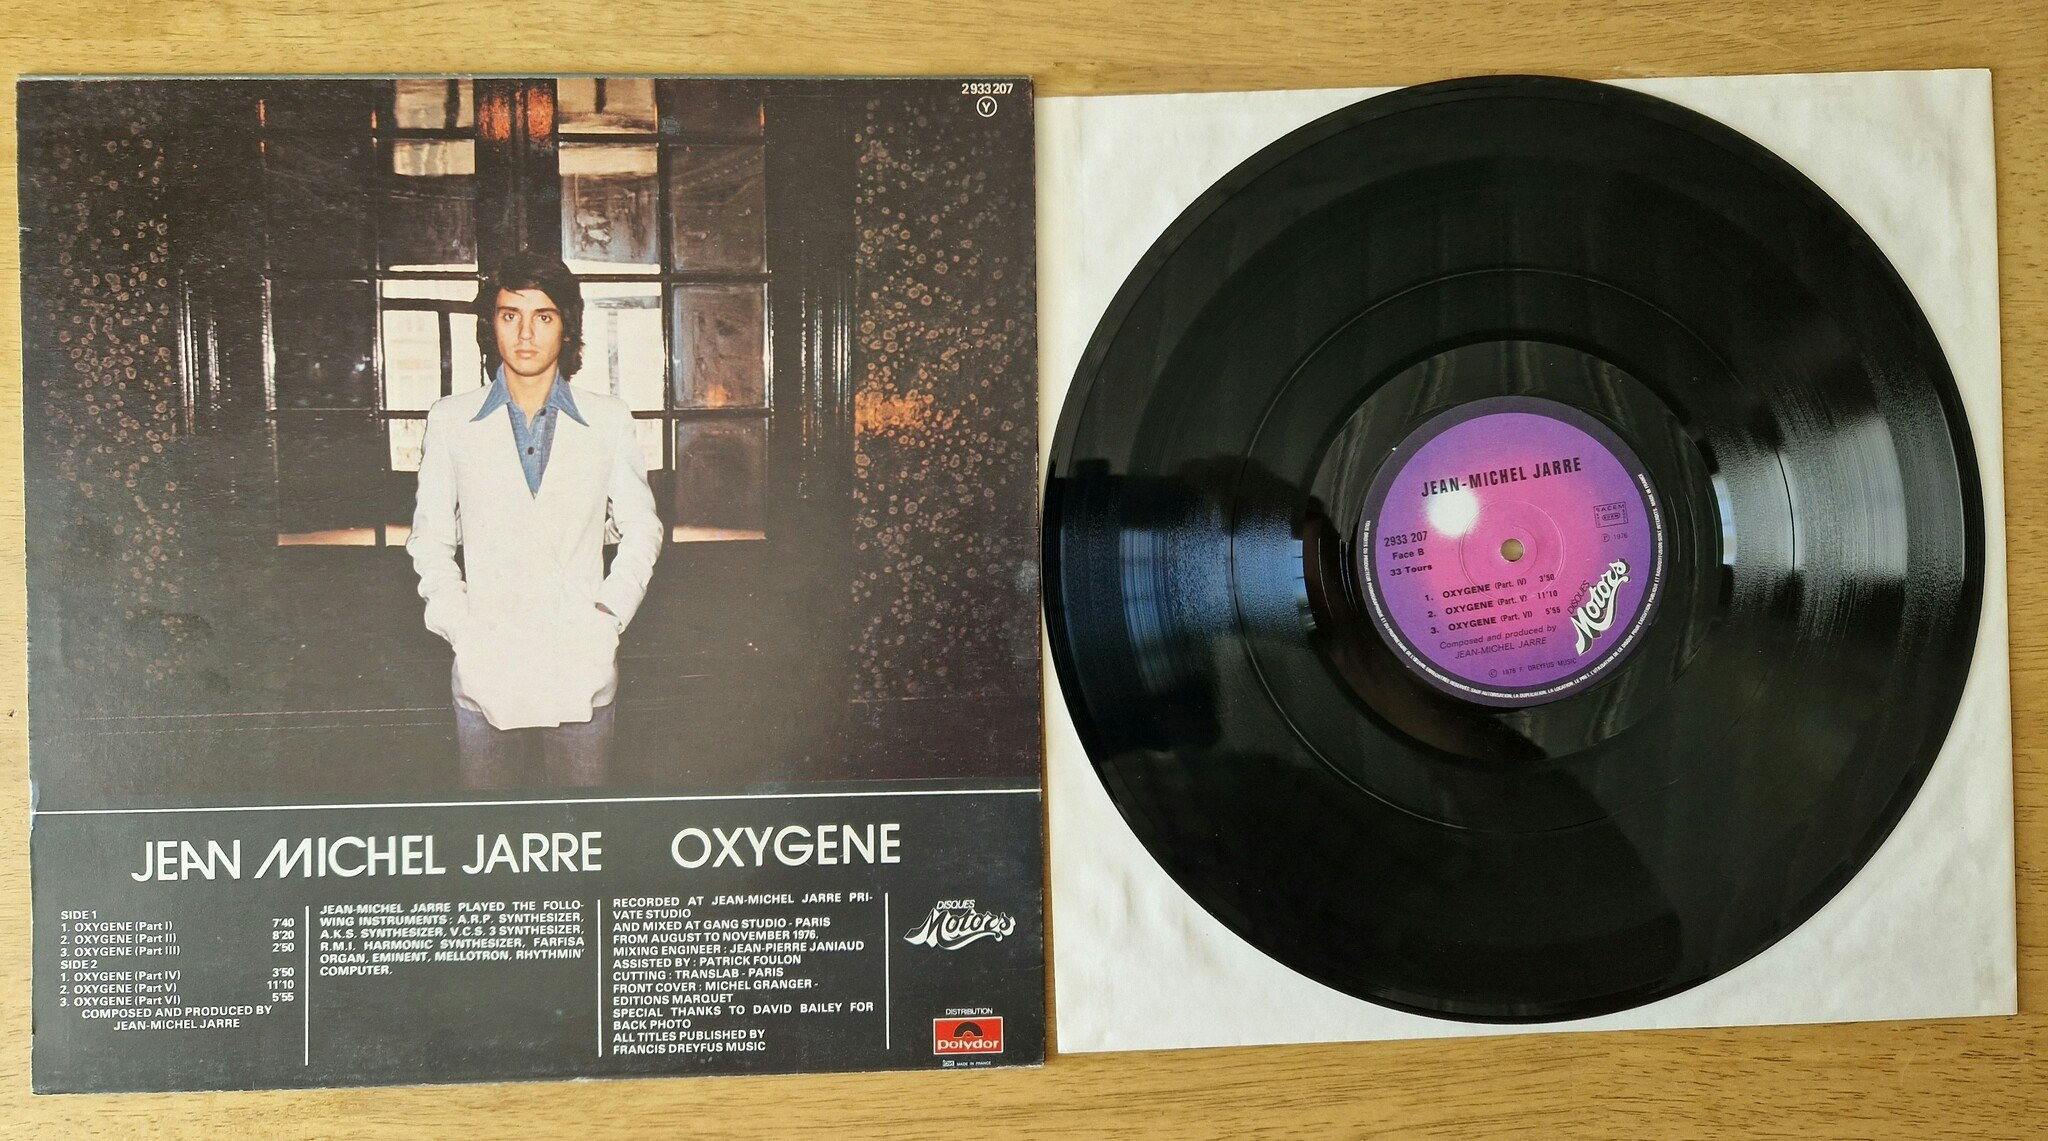 Jean Michel Jarre, Oxygene. Vinyl LP